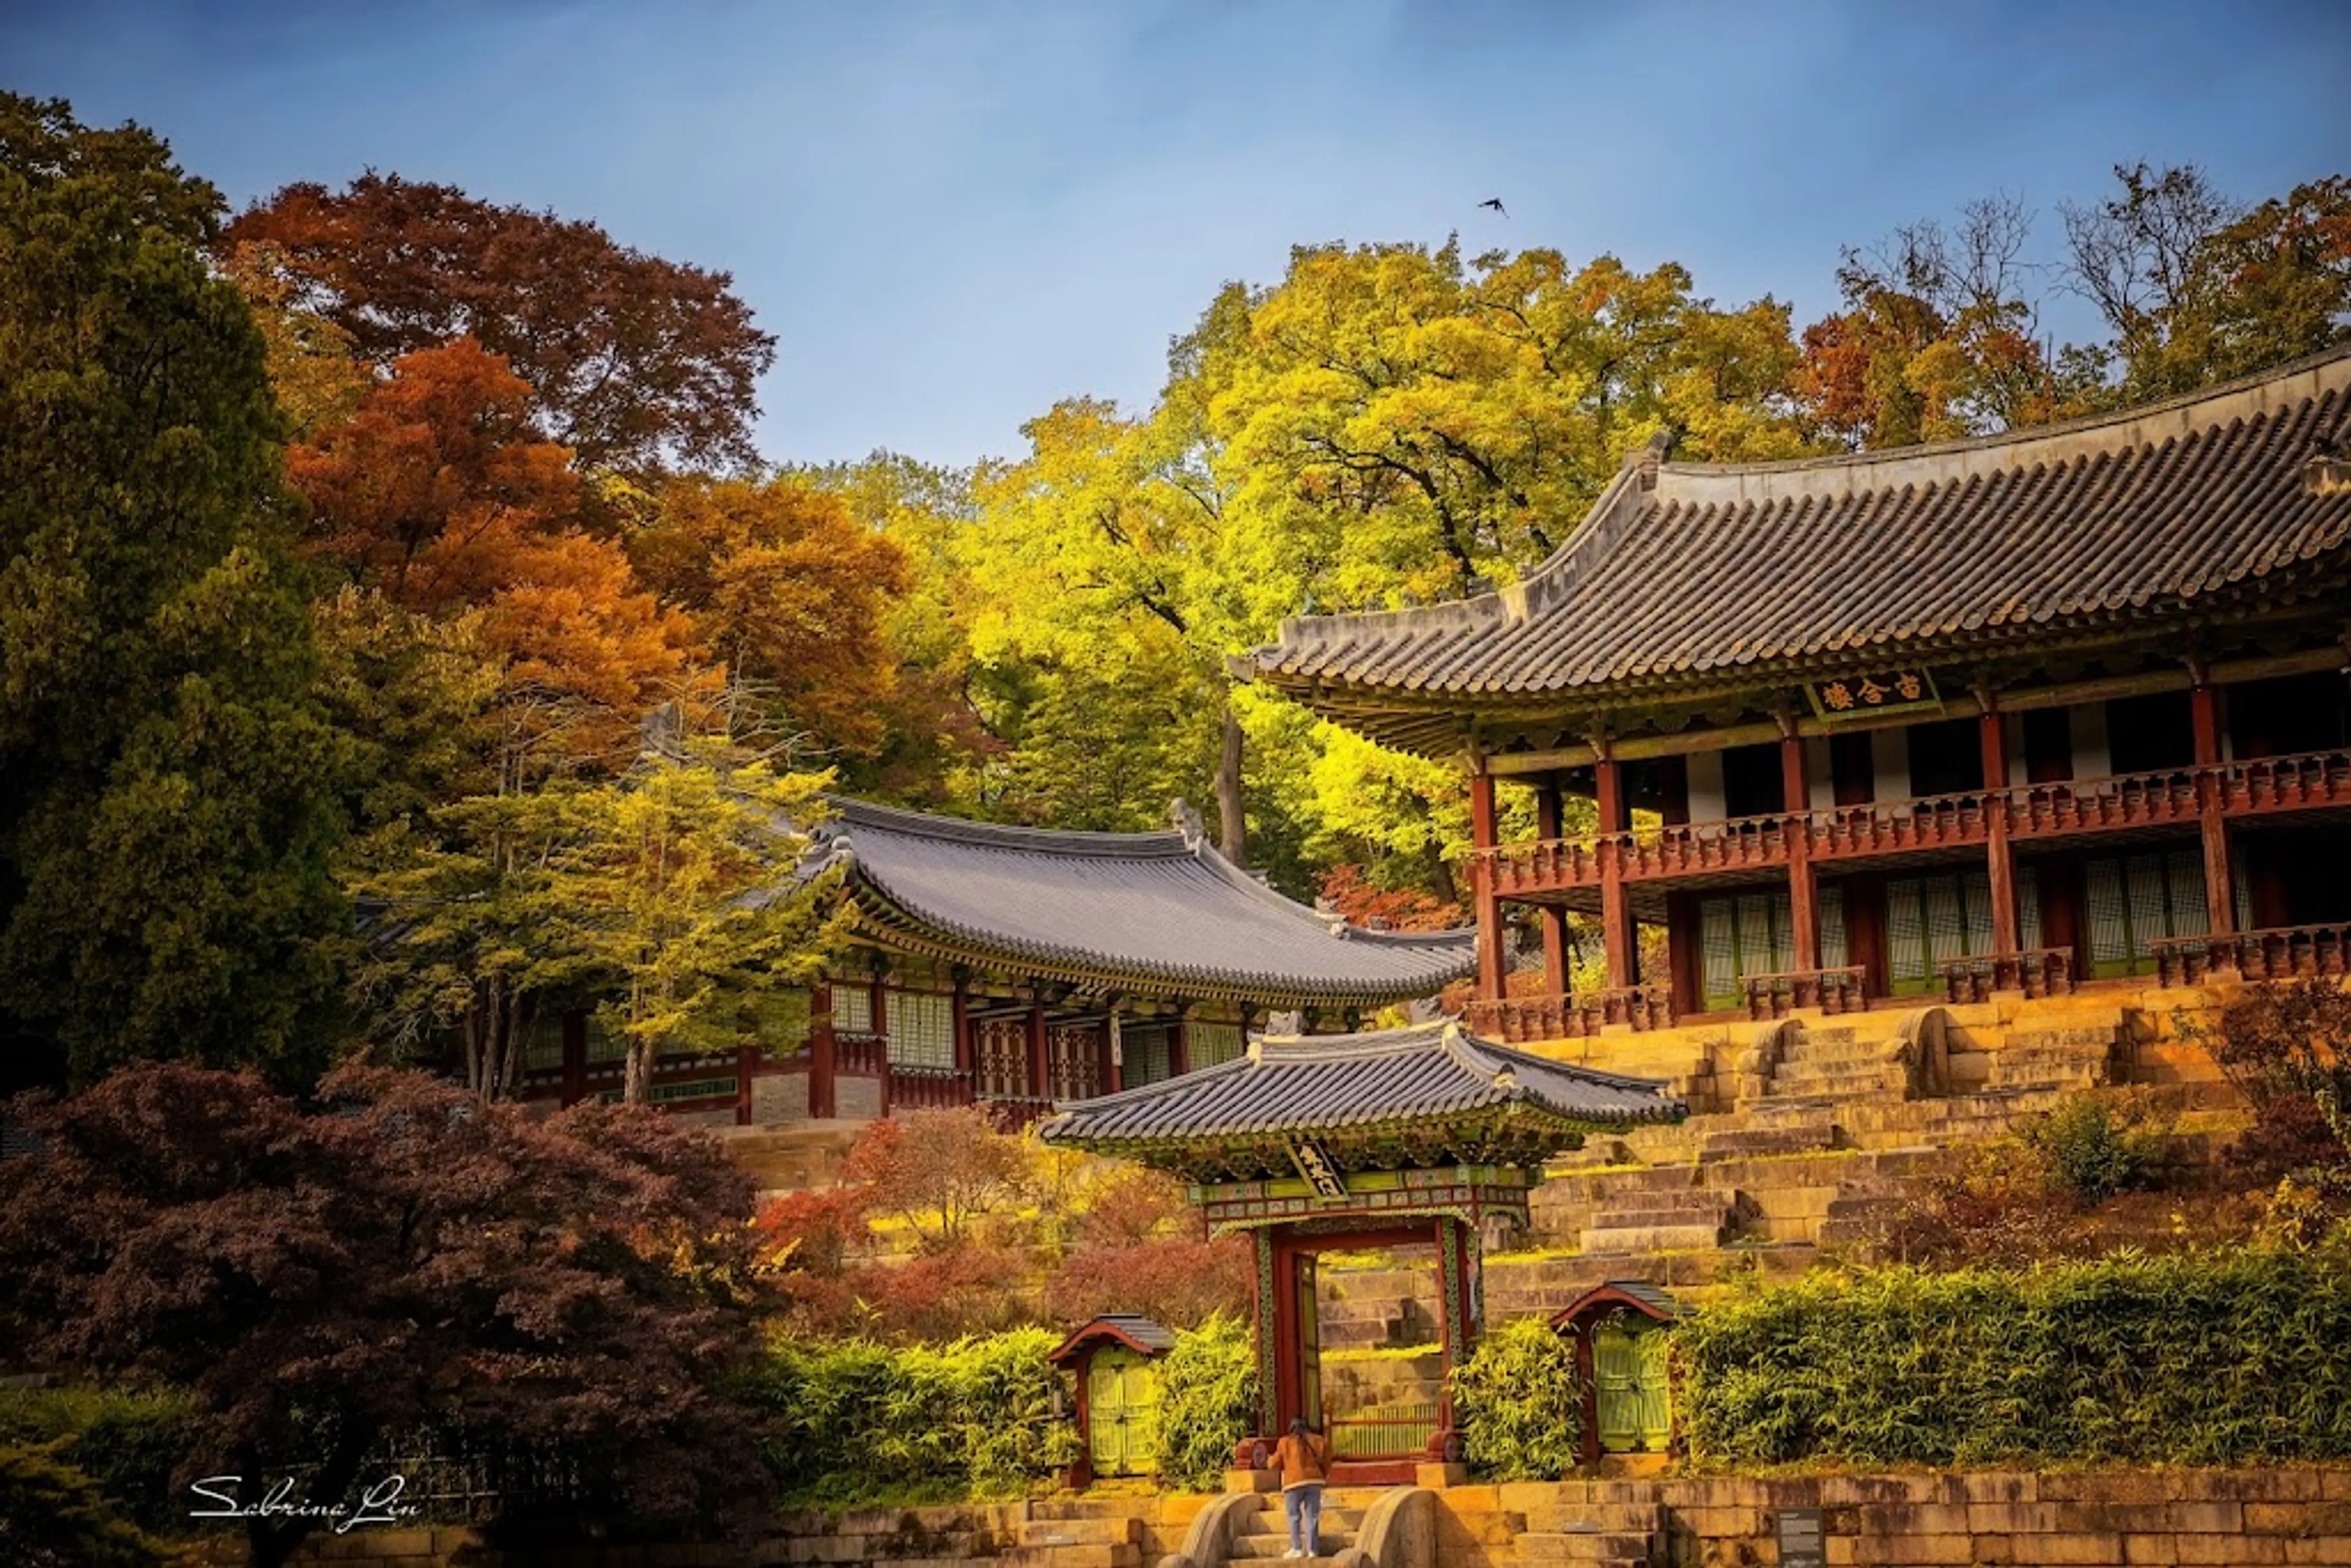 Changdeokgung Palace and its Secret Garden